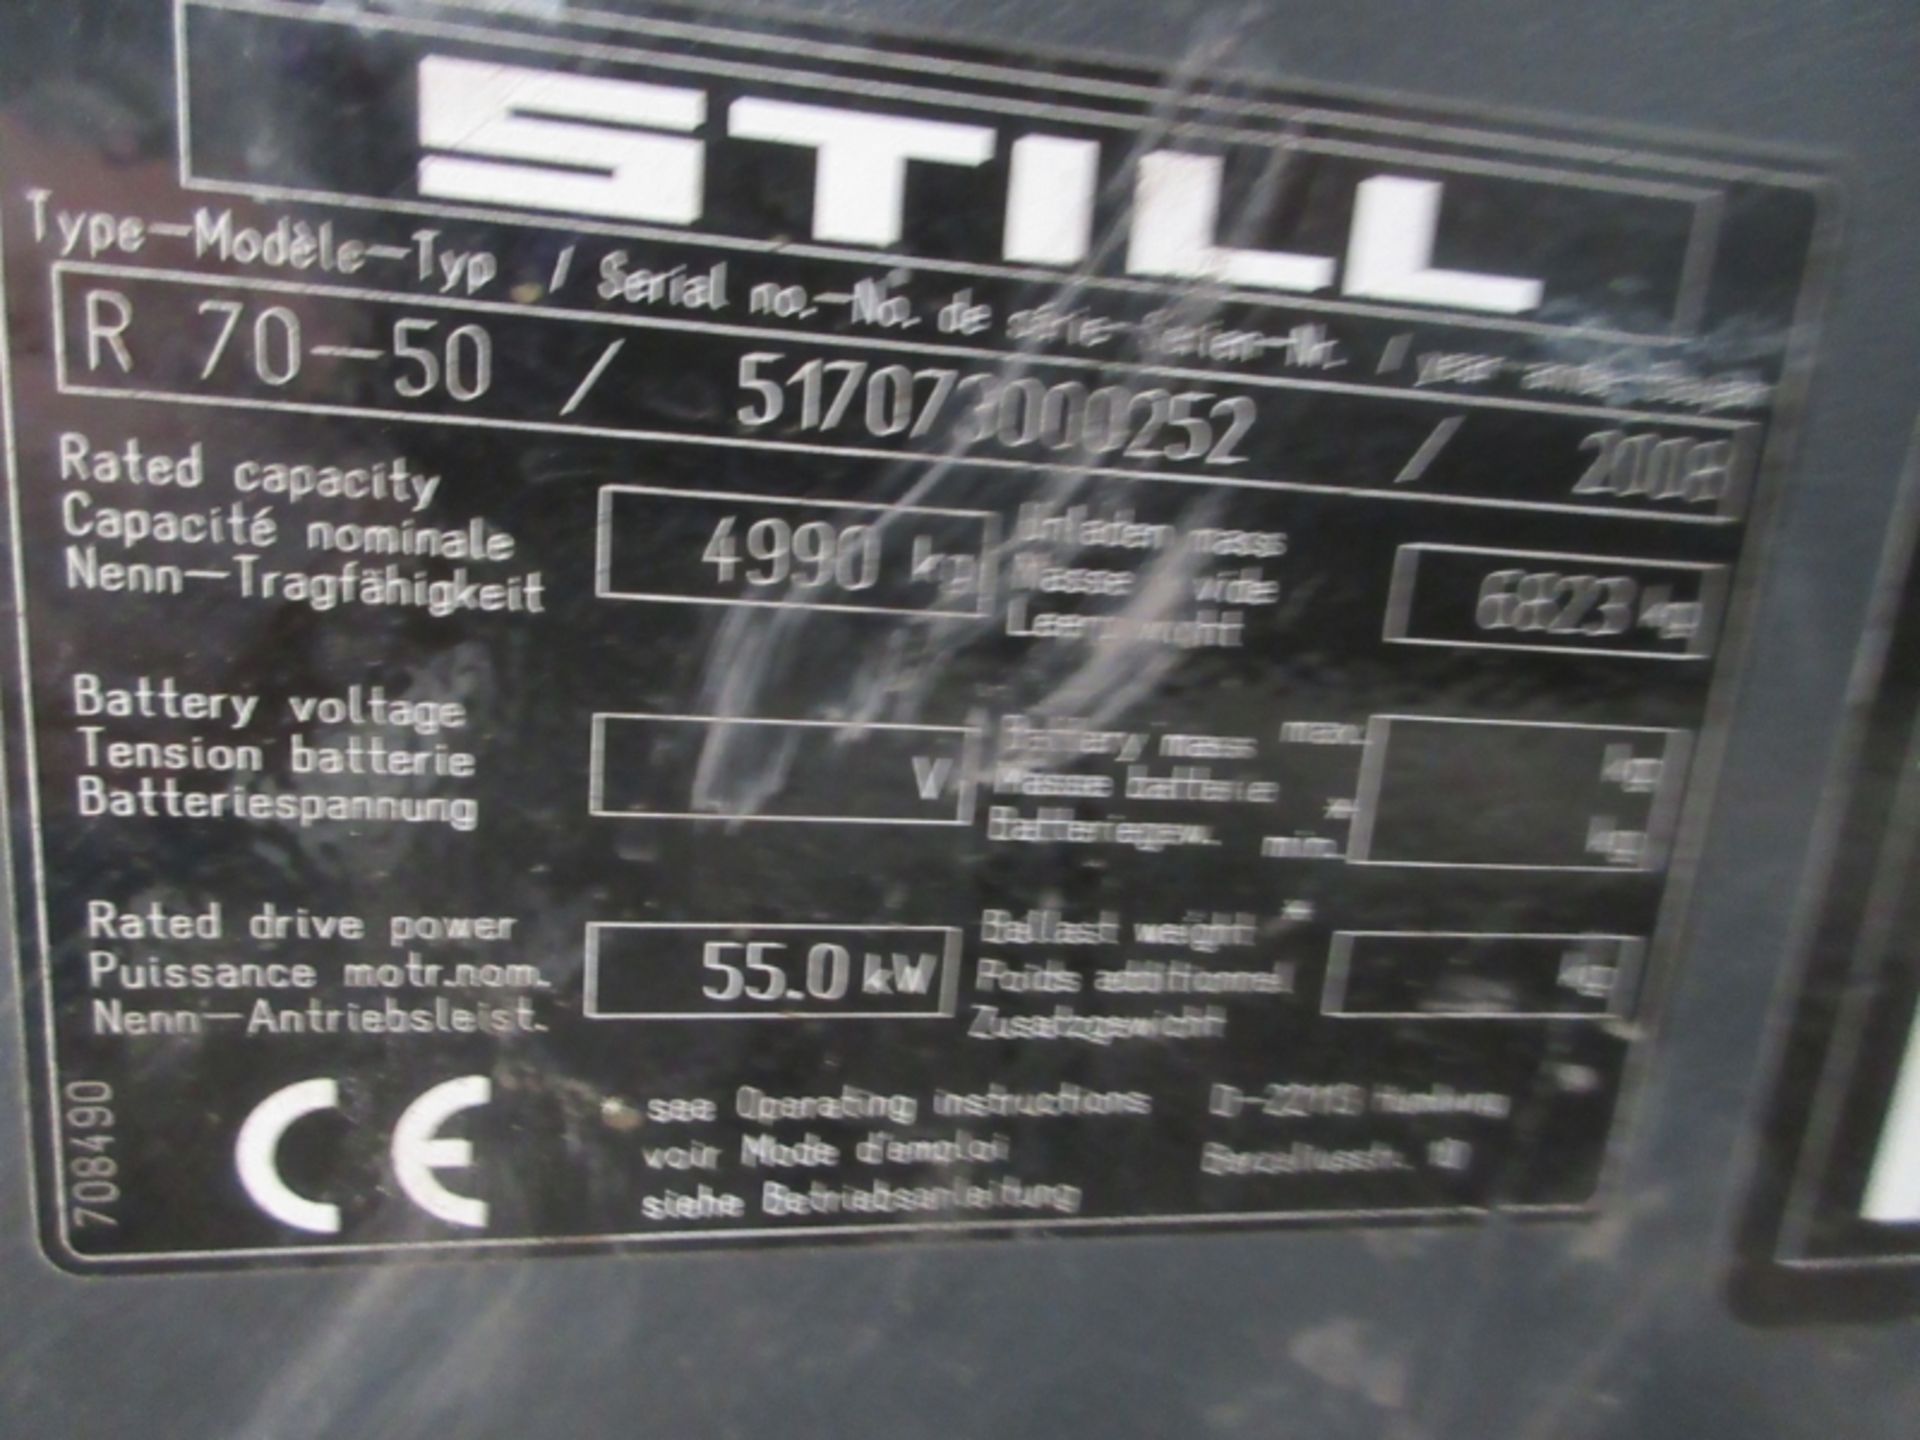 STILL R70-50 Plant Diesel - VIN: 517073000252 - Year: 2008 - 7,127 Hours - Triplex Forklift, - Image 9 of 11